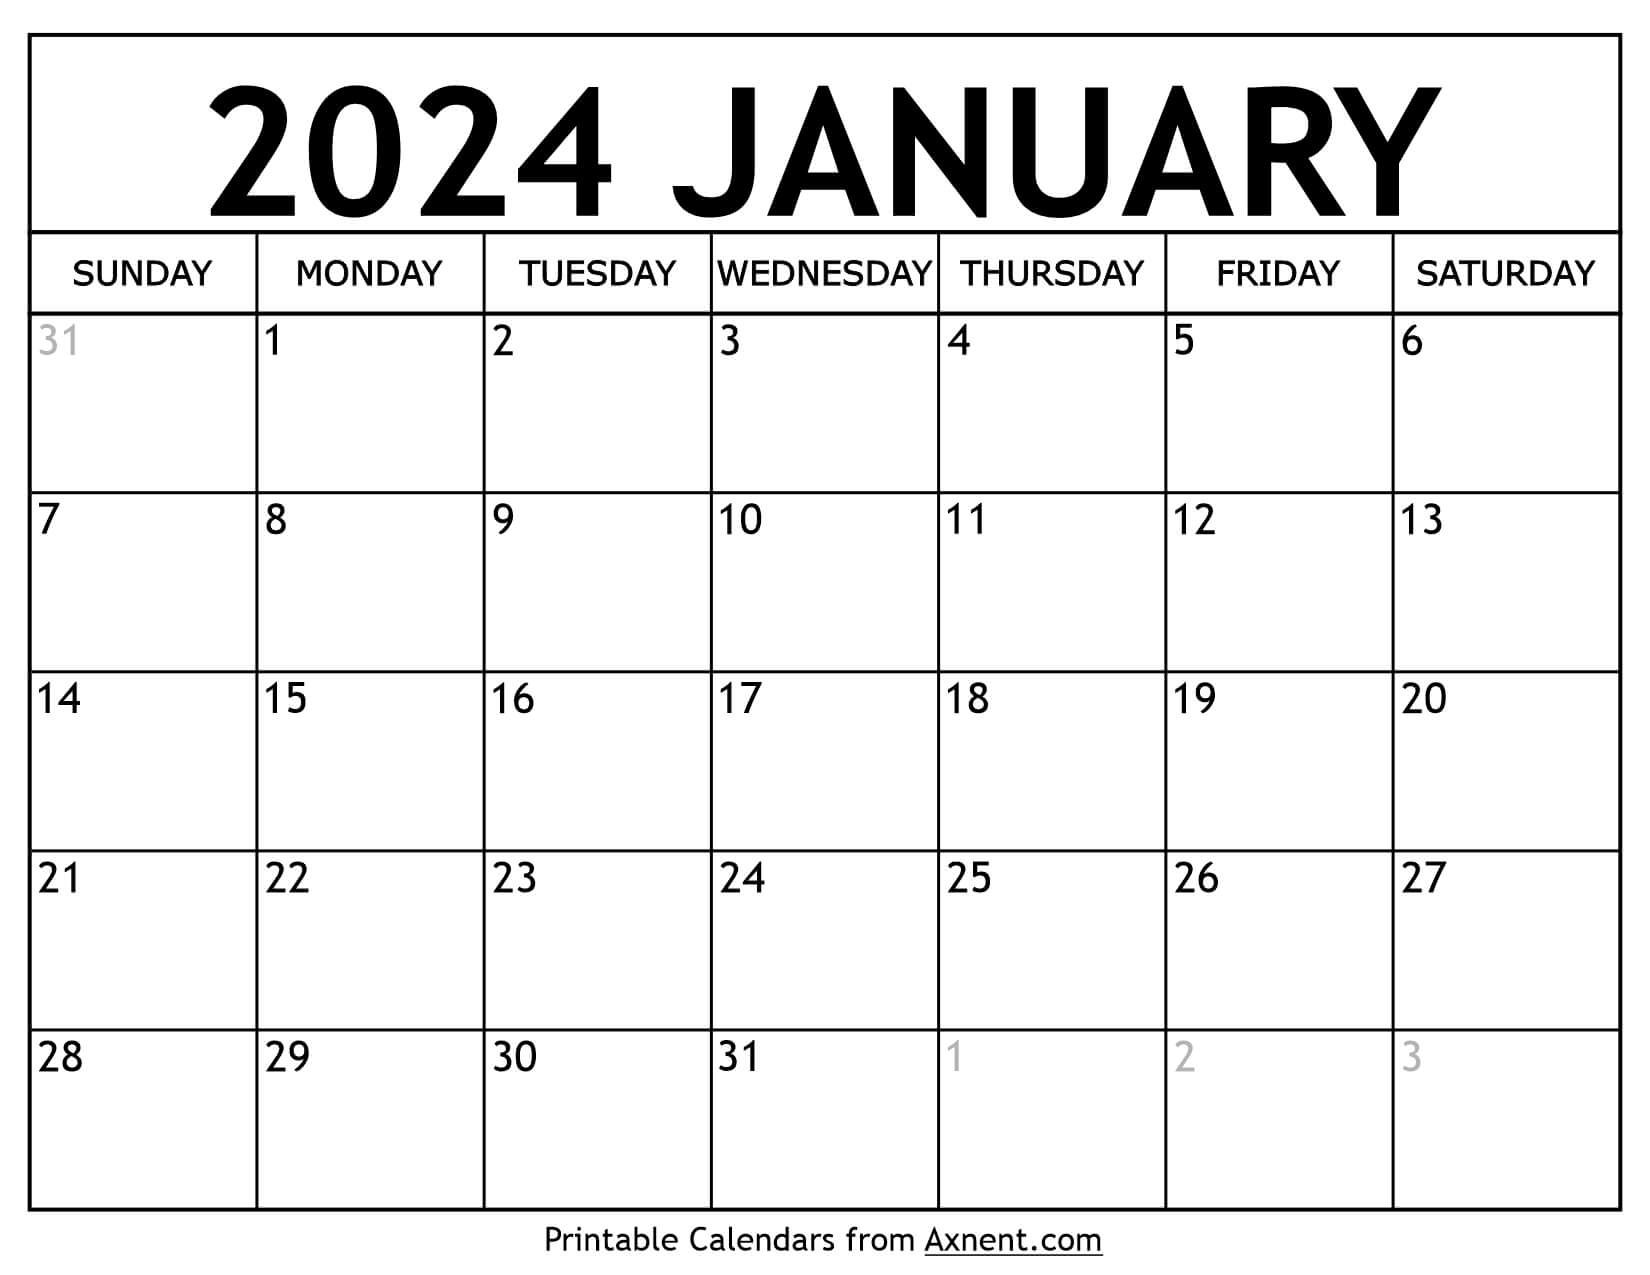 Printable January 2024 Calendar Template - Print Now for Free Printable 2024 Calendar January